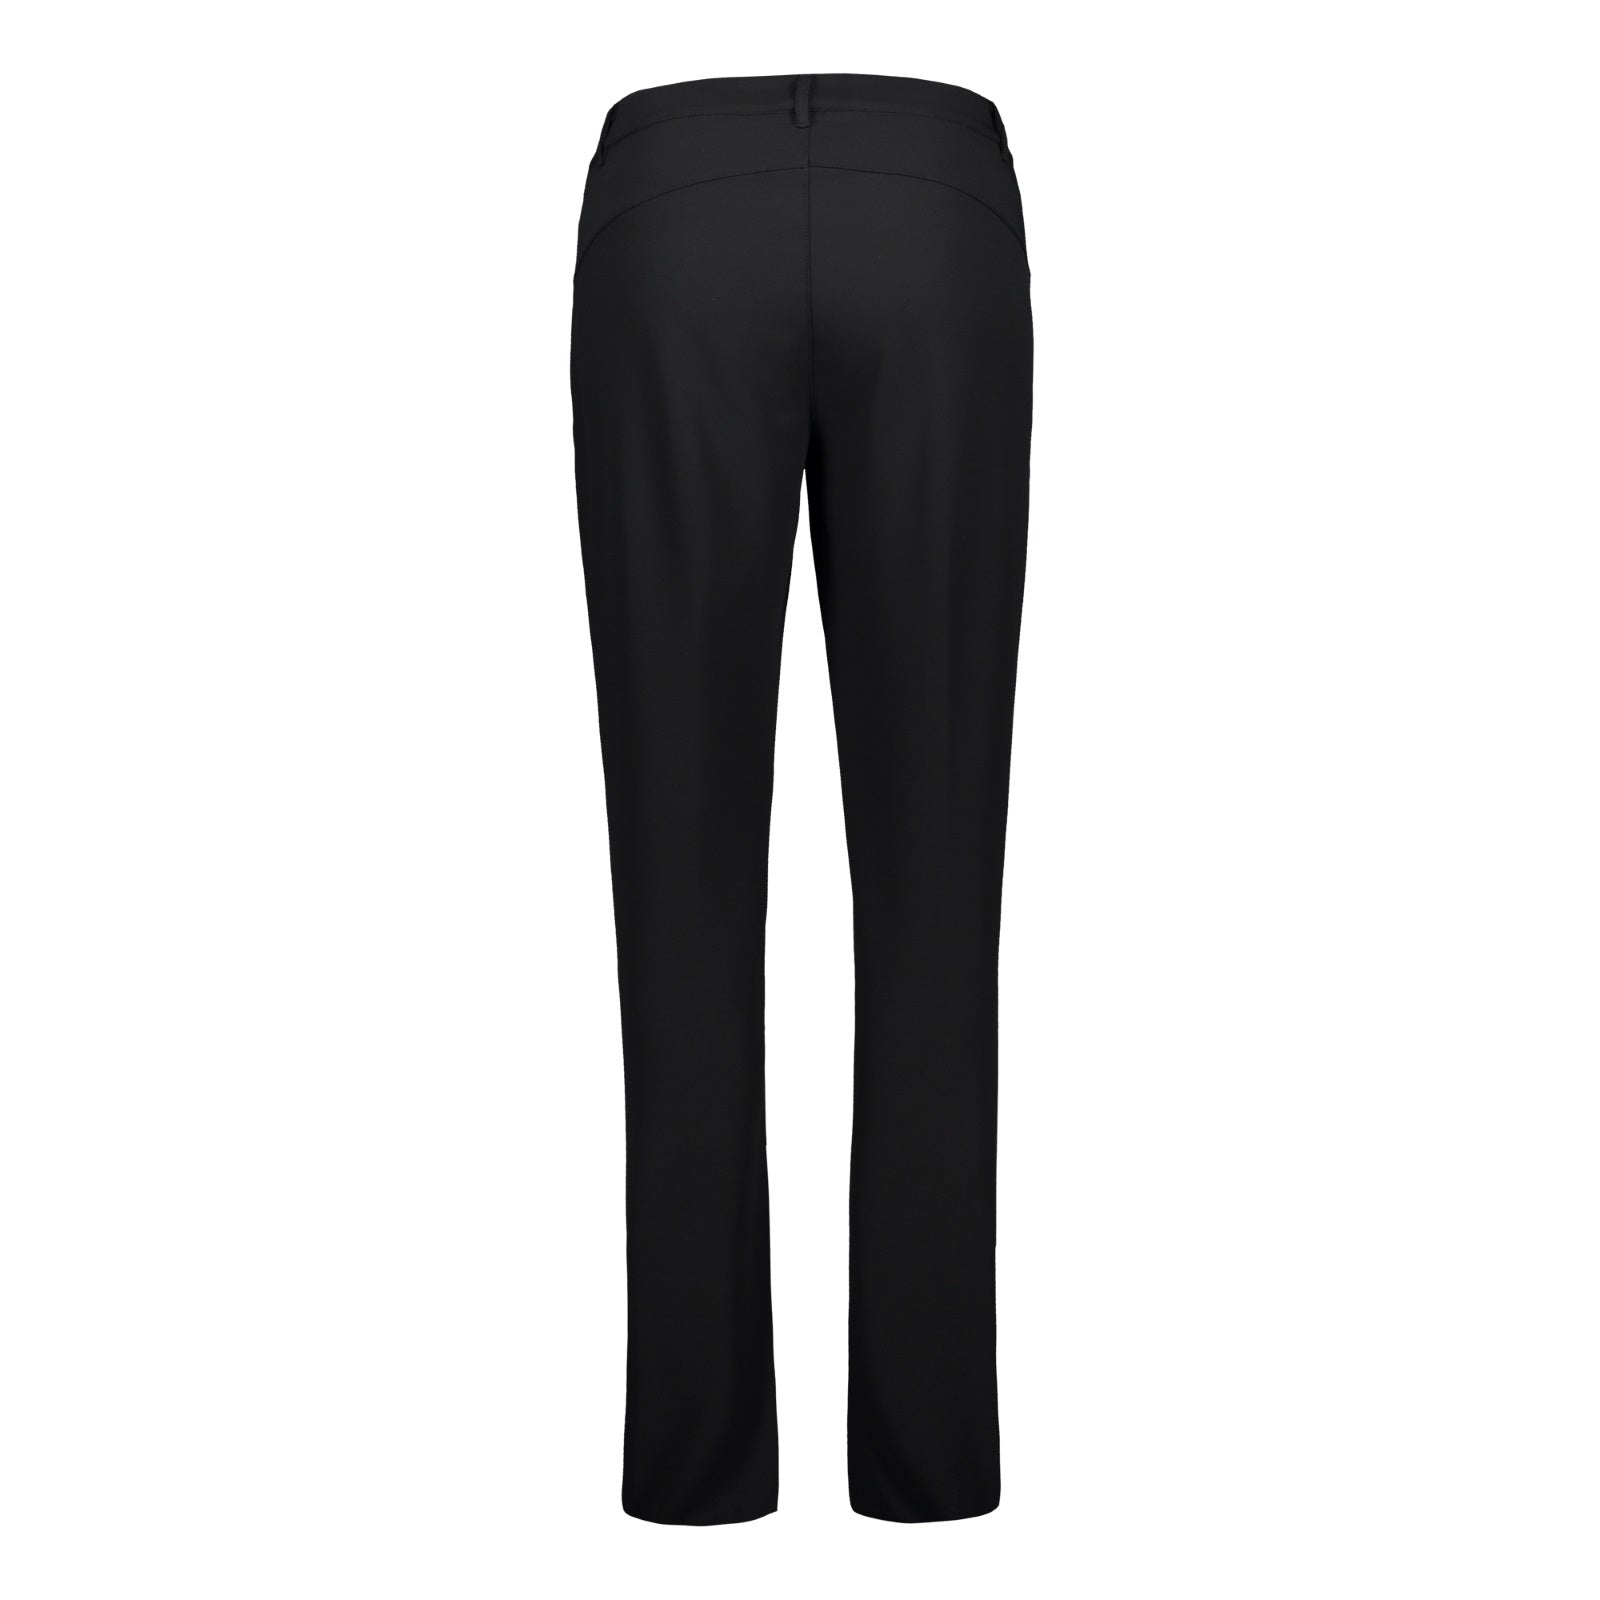 Catmandoo Rocket Ladies Warm Stretch Trouser Black Product Image Rear